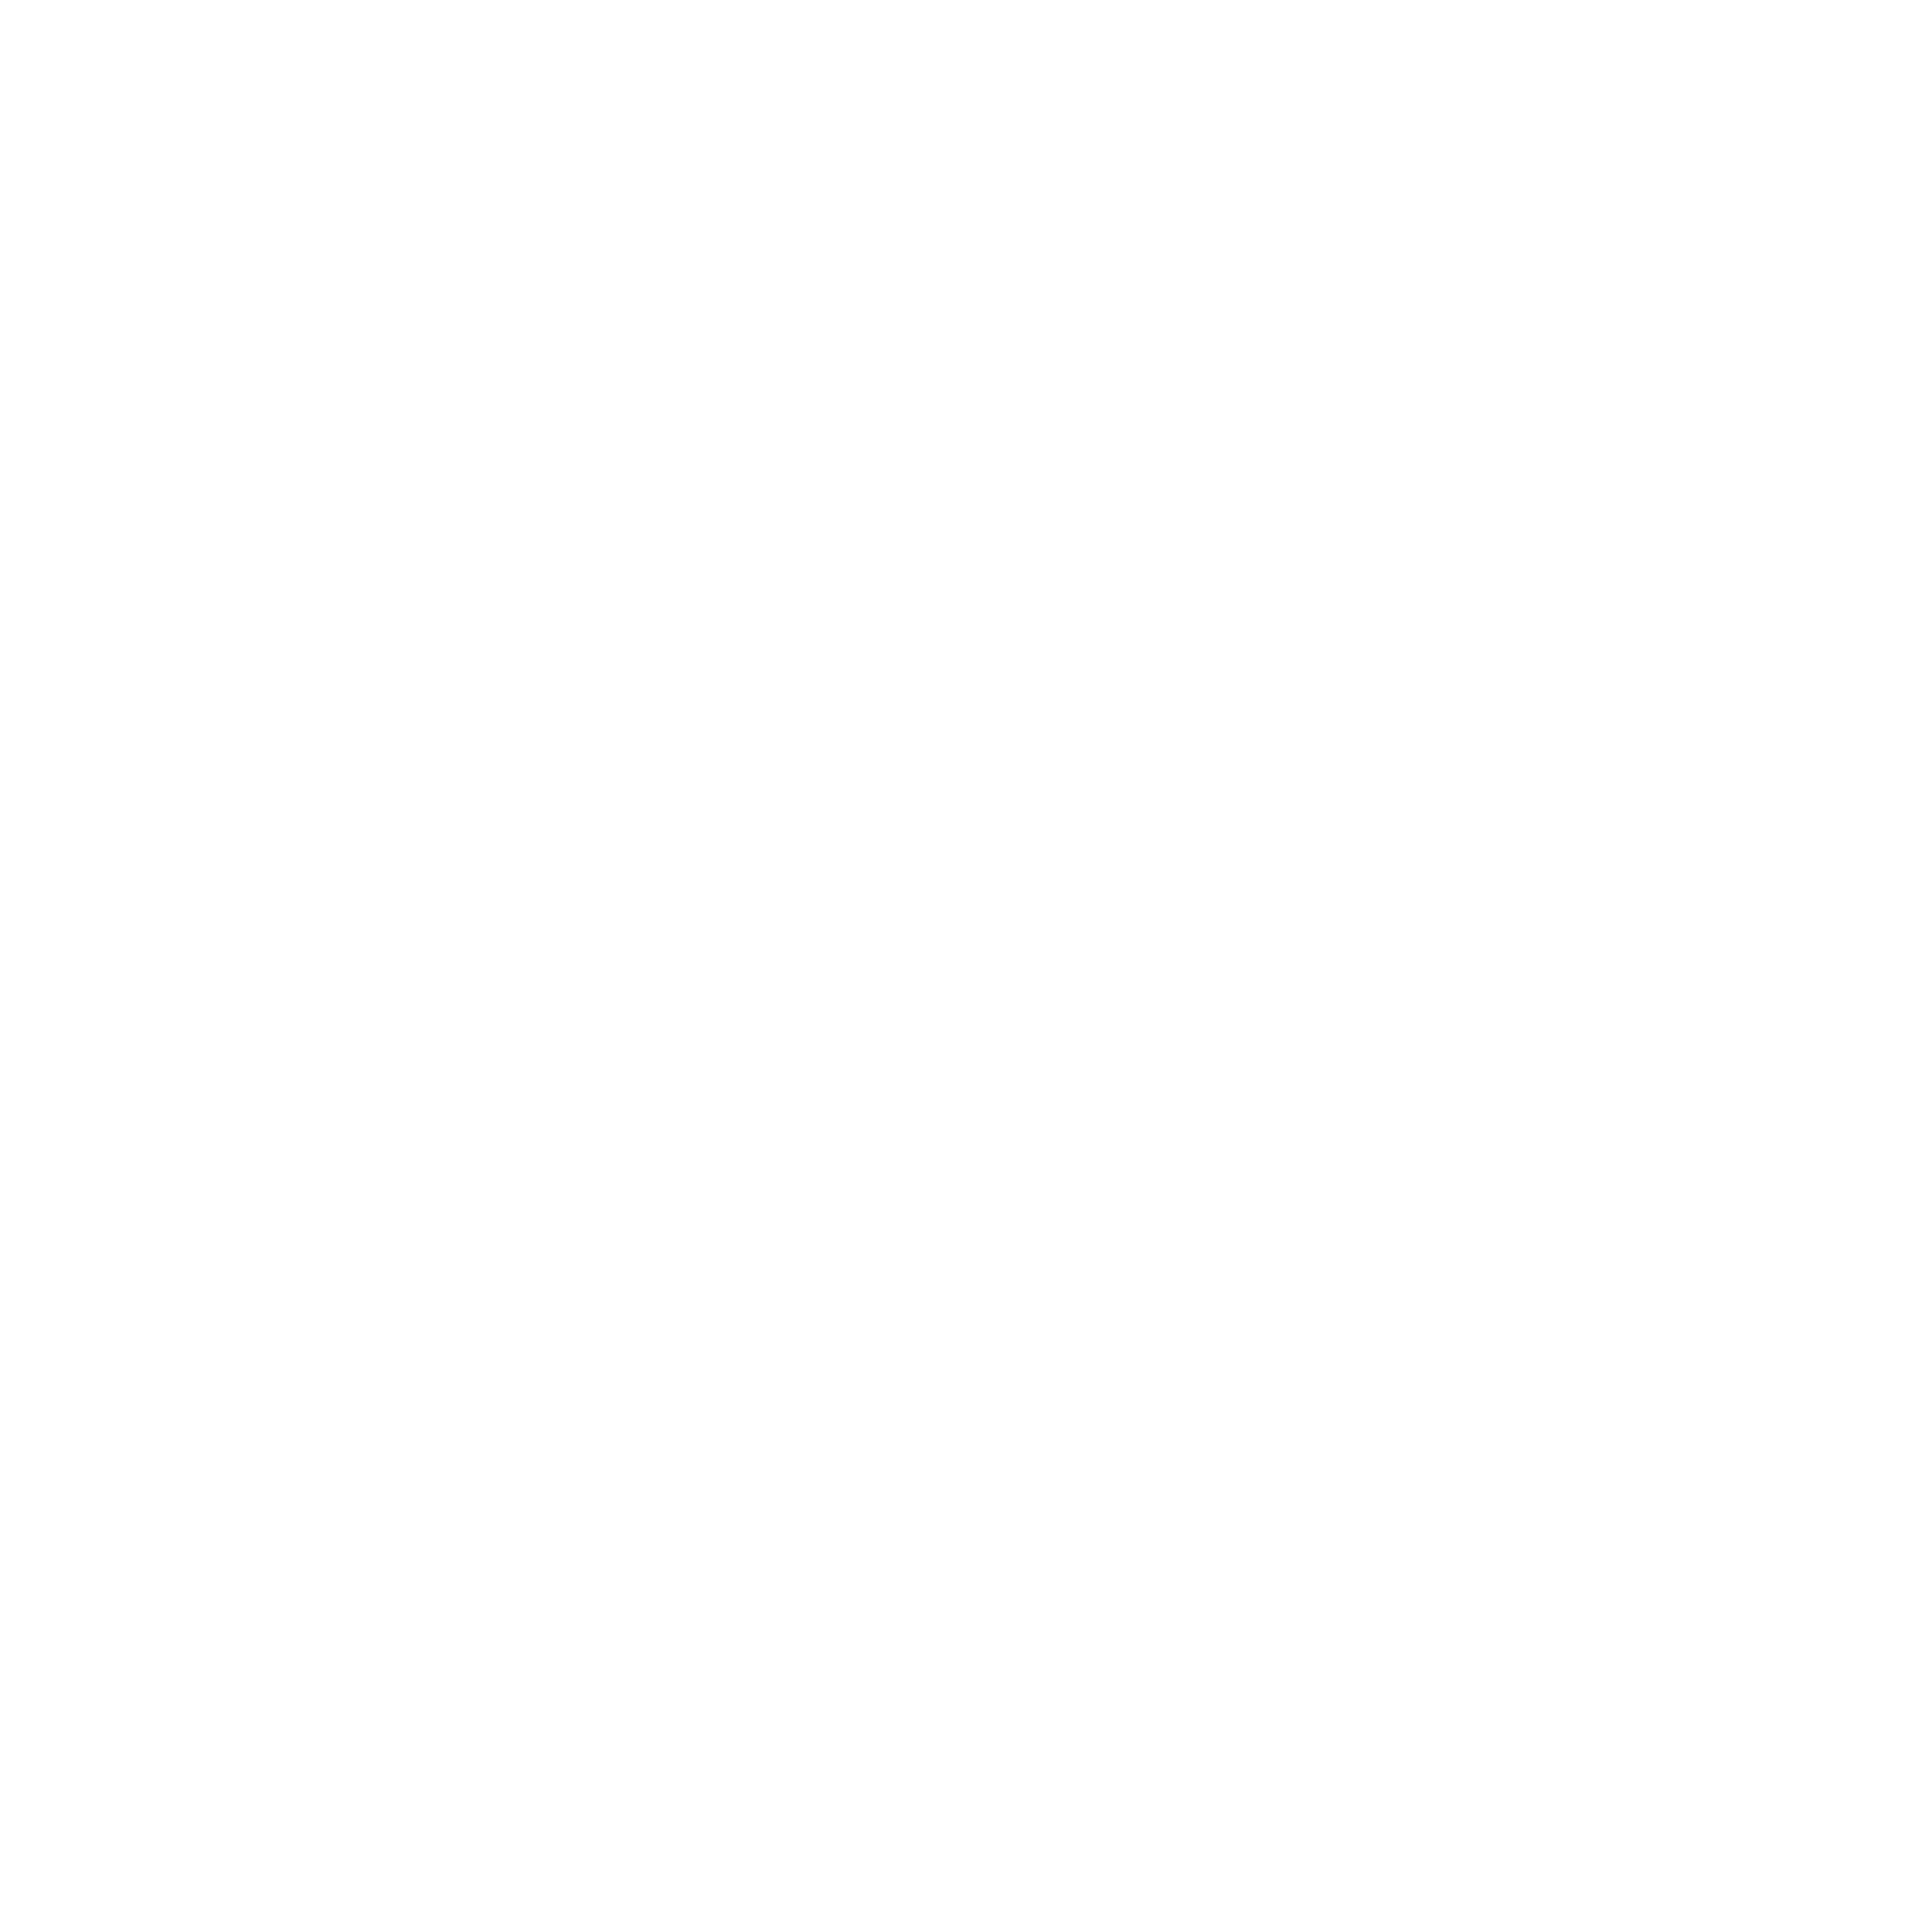 Denver's Tanning Club